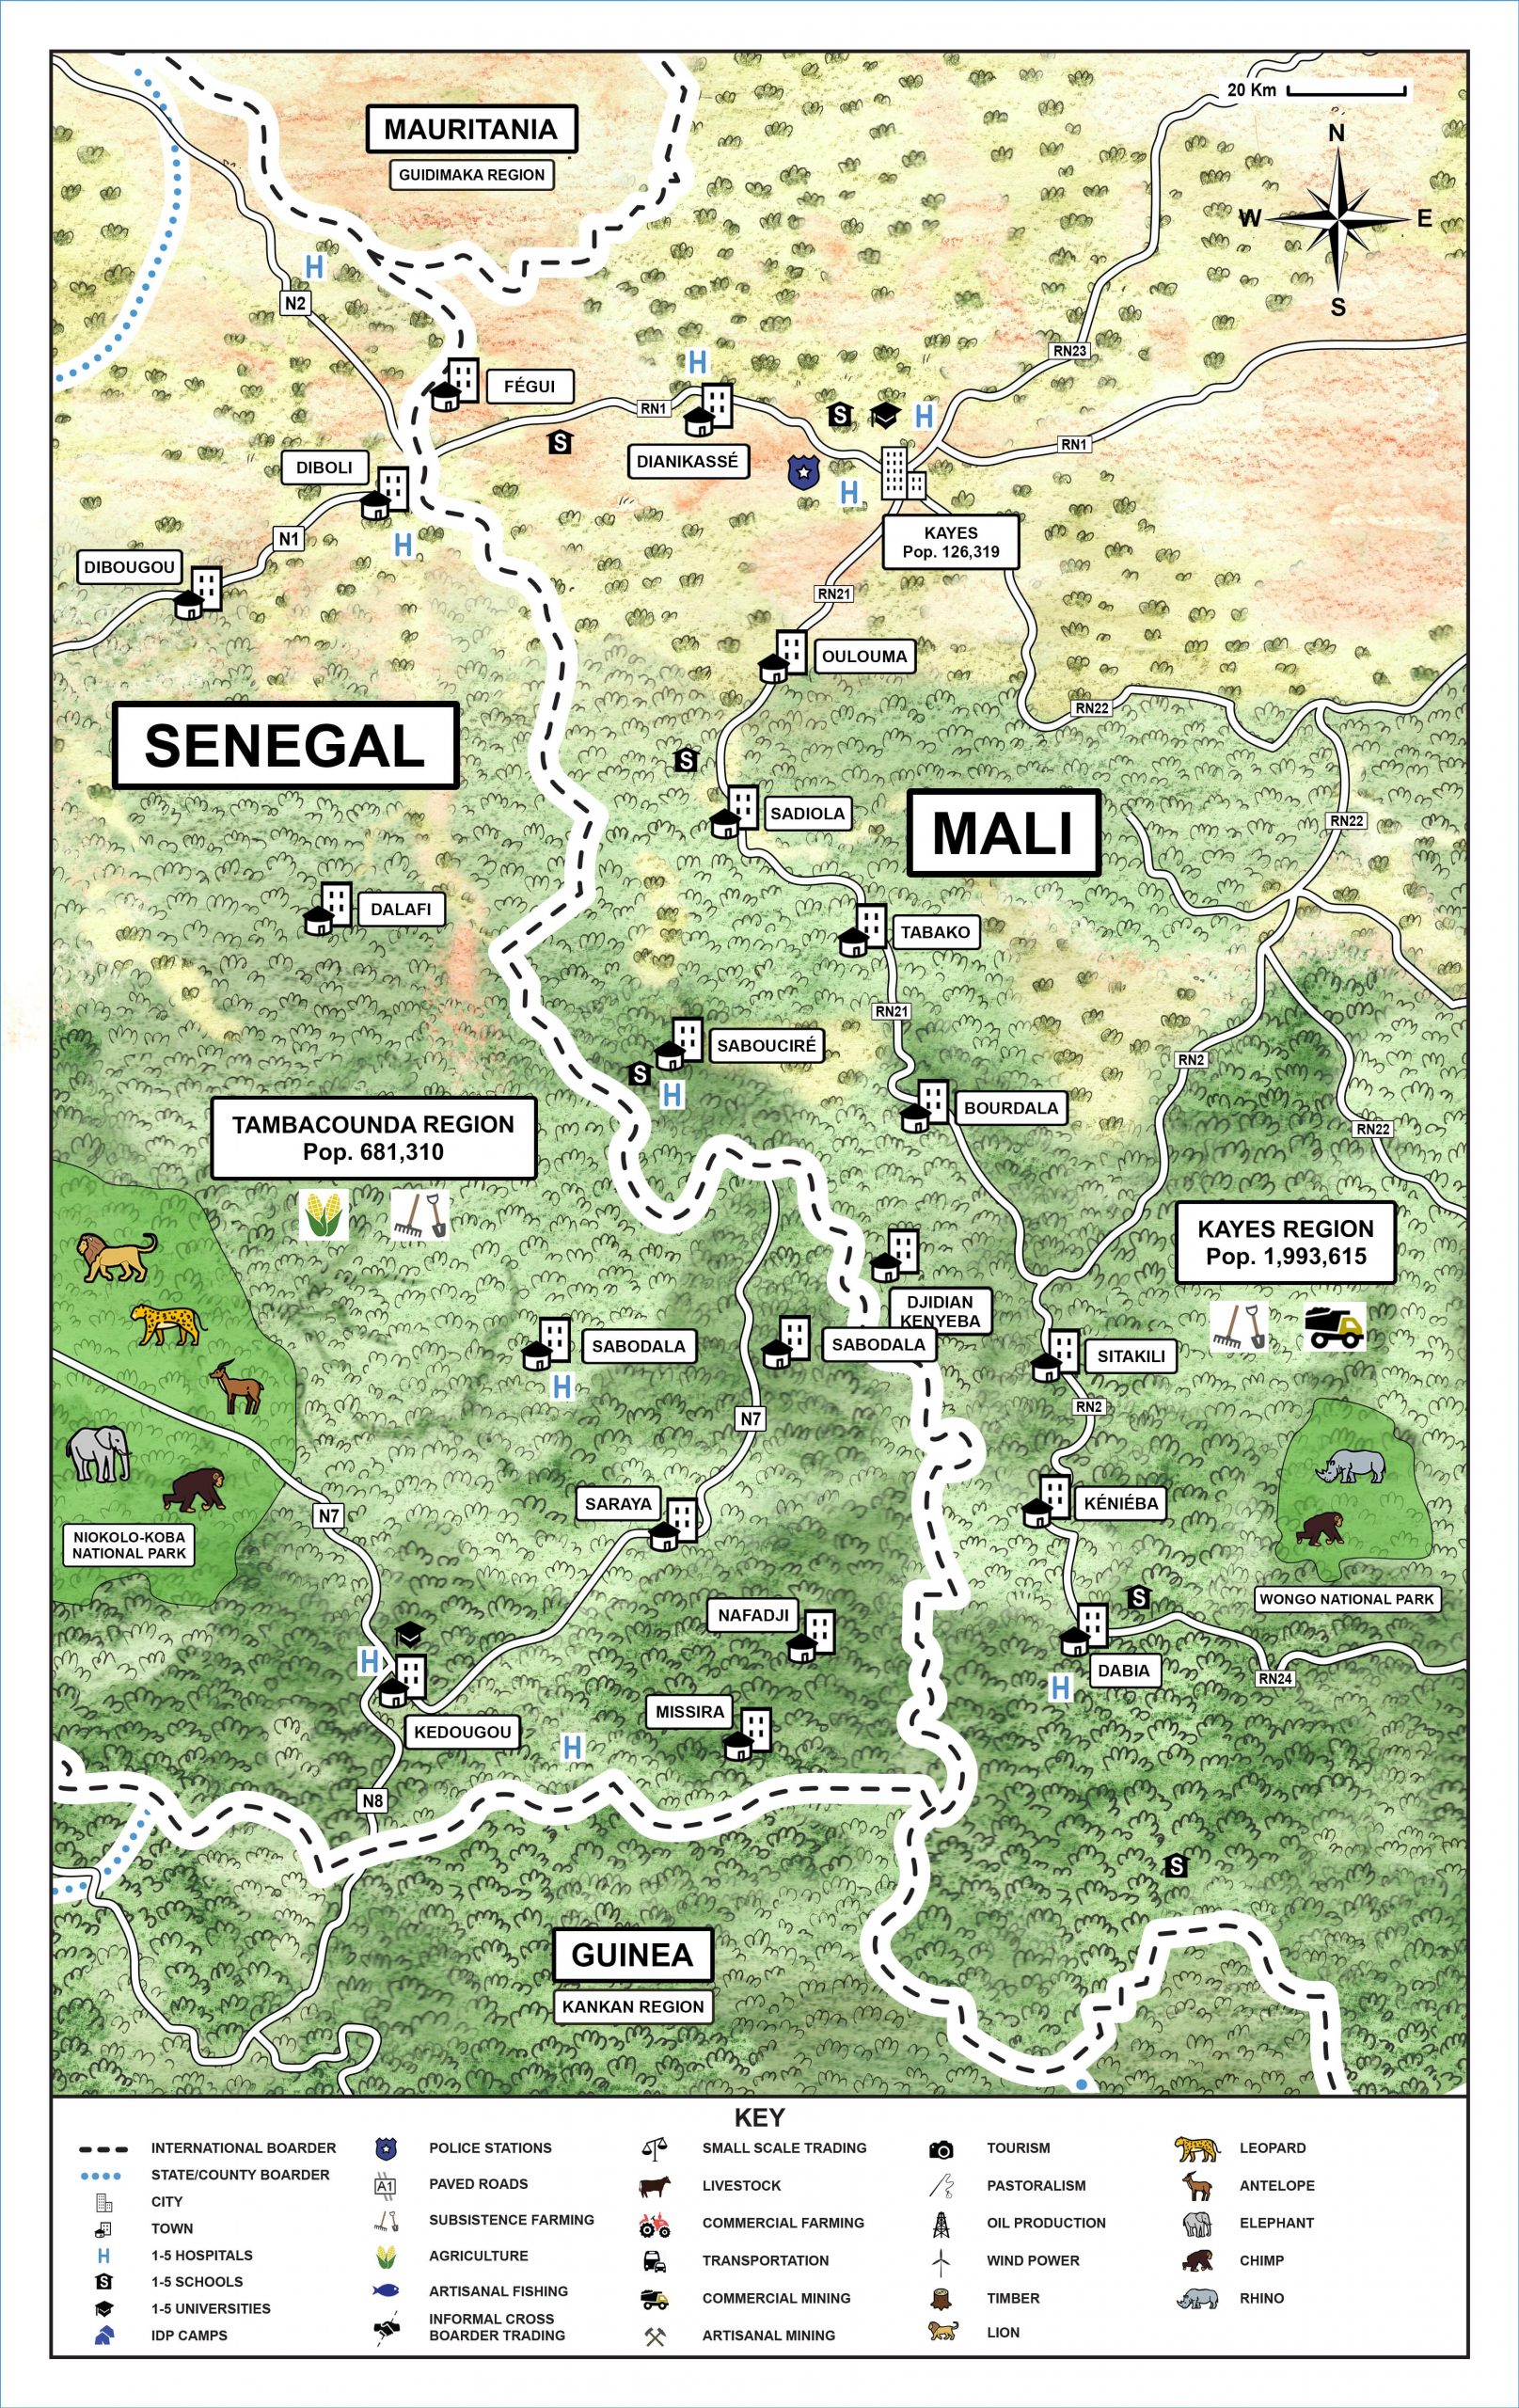 MALI - SENEGAL_illustration